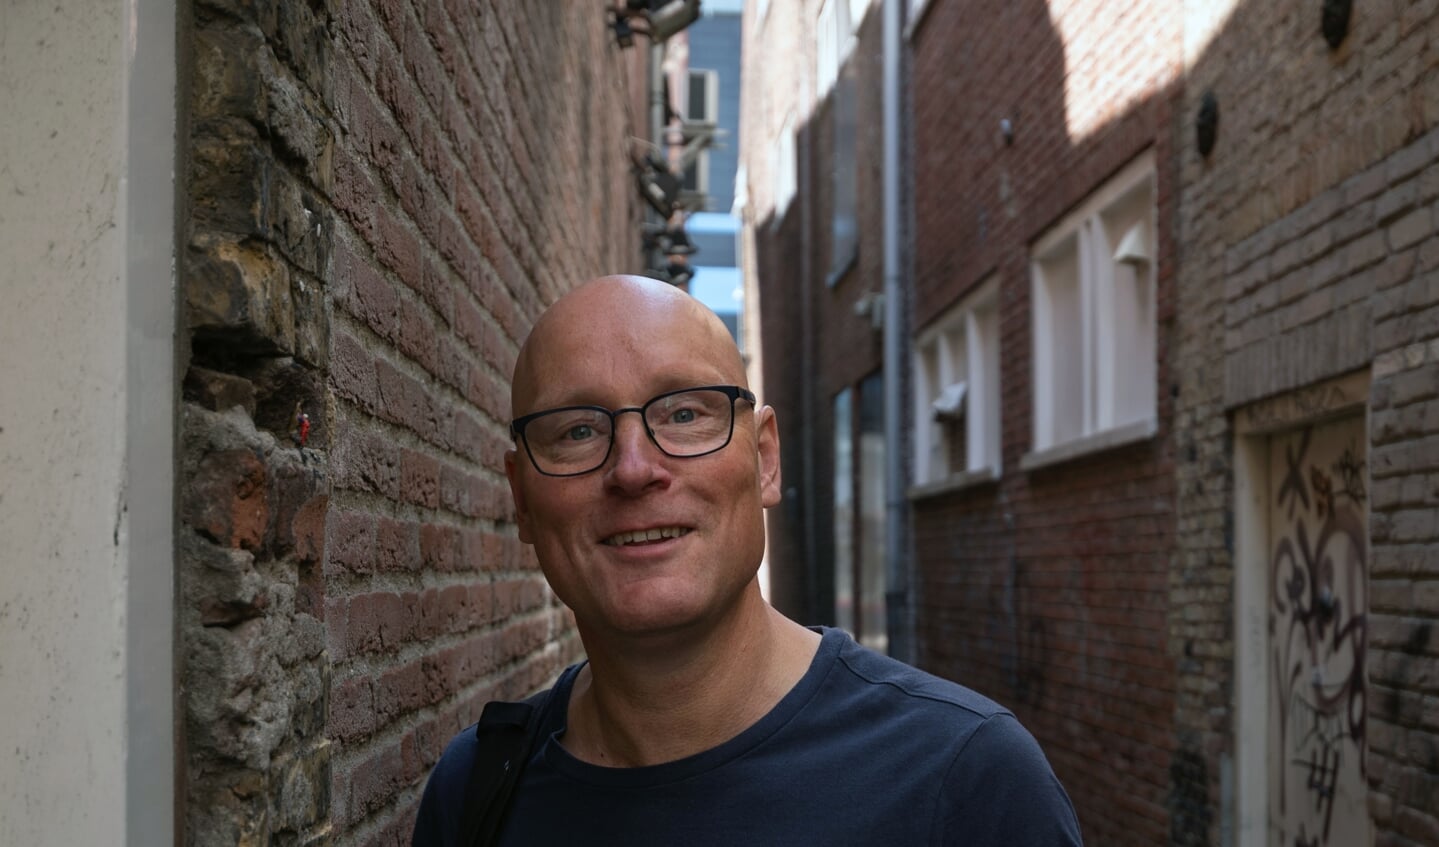 Michel Tilma, de man achter de Miniature People in Leeuwarden. 